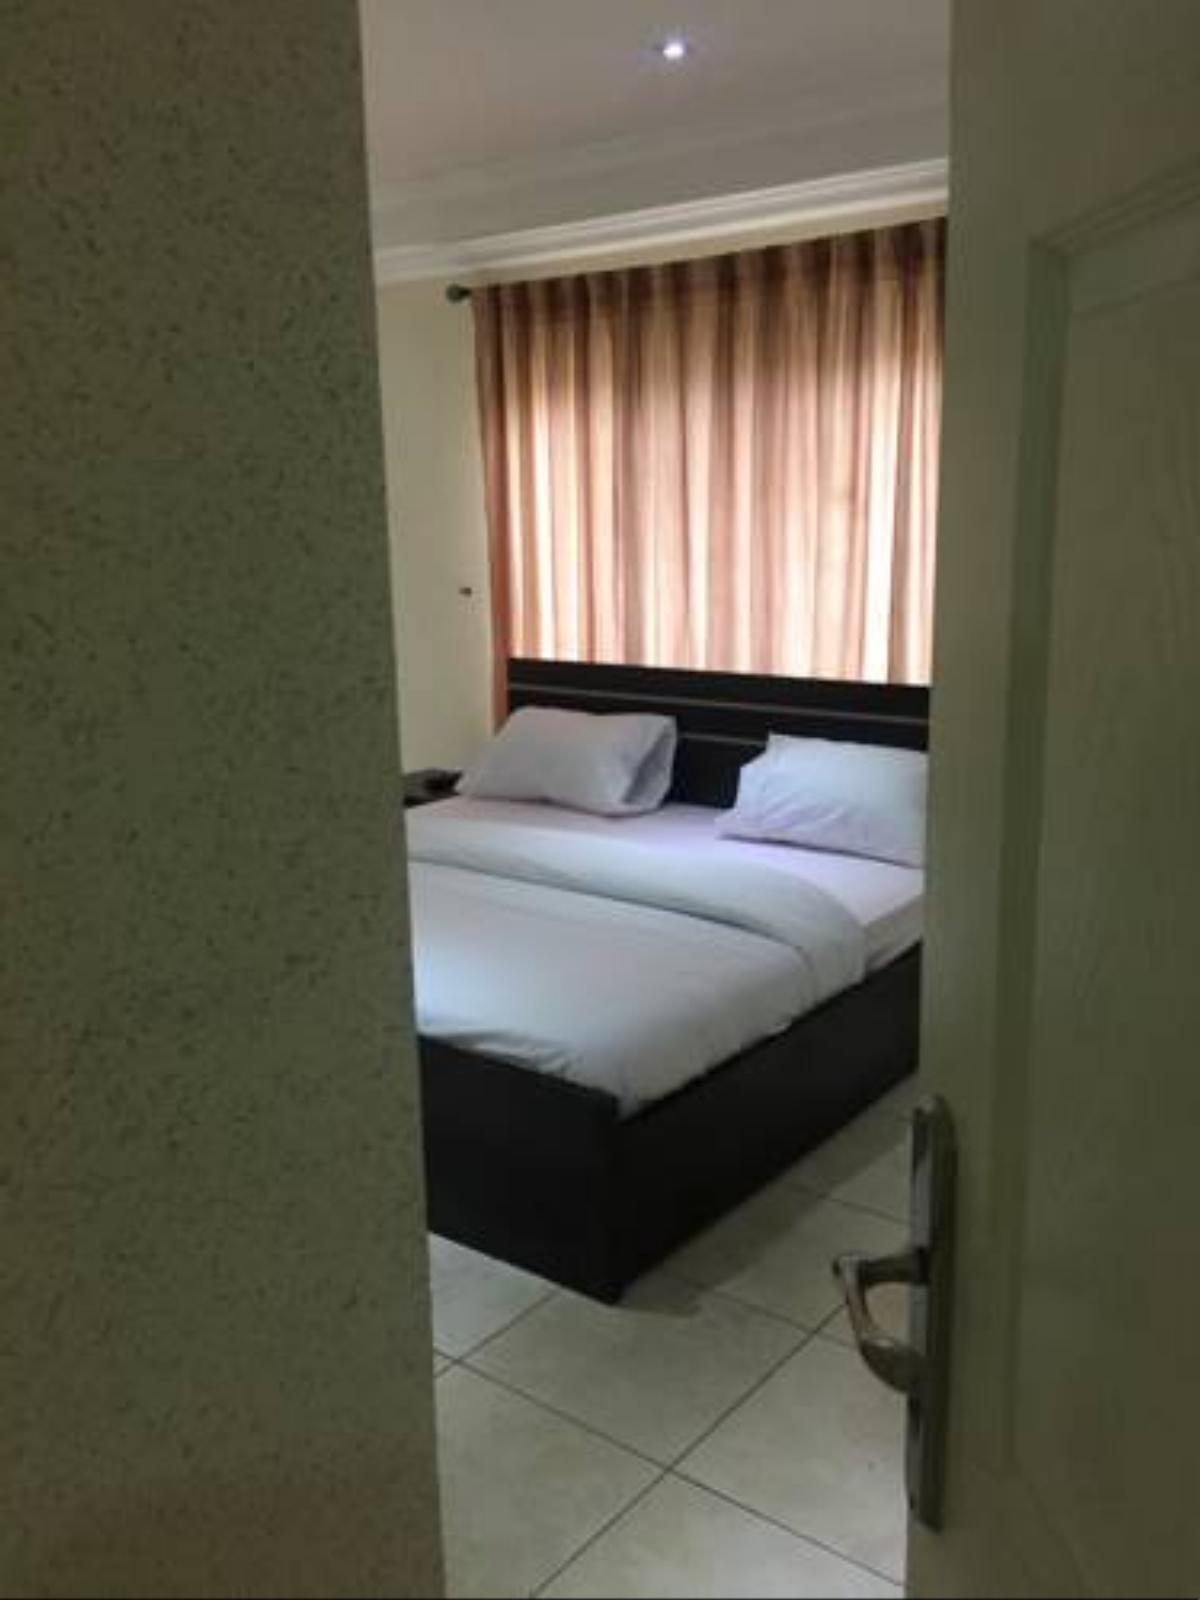 Foxcroft Hotel Lagos Nigeria